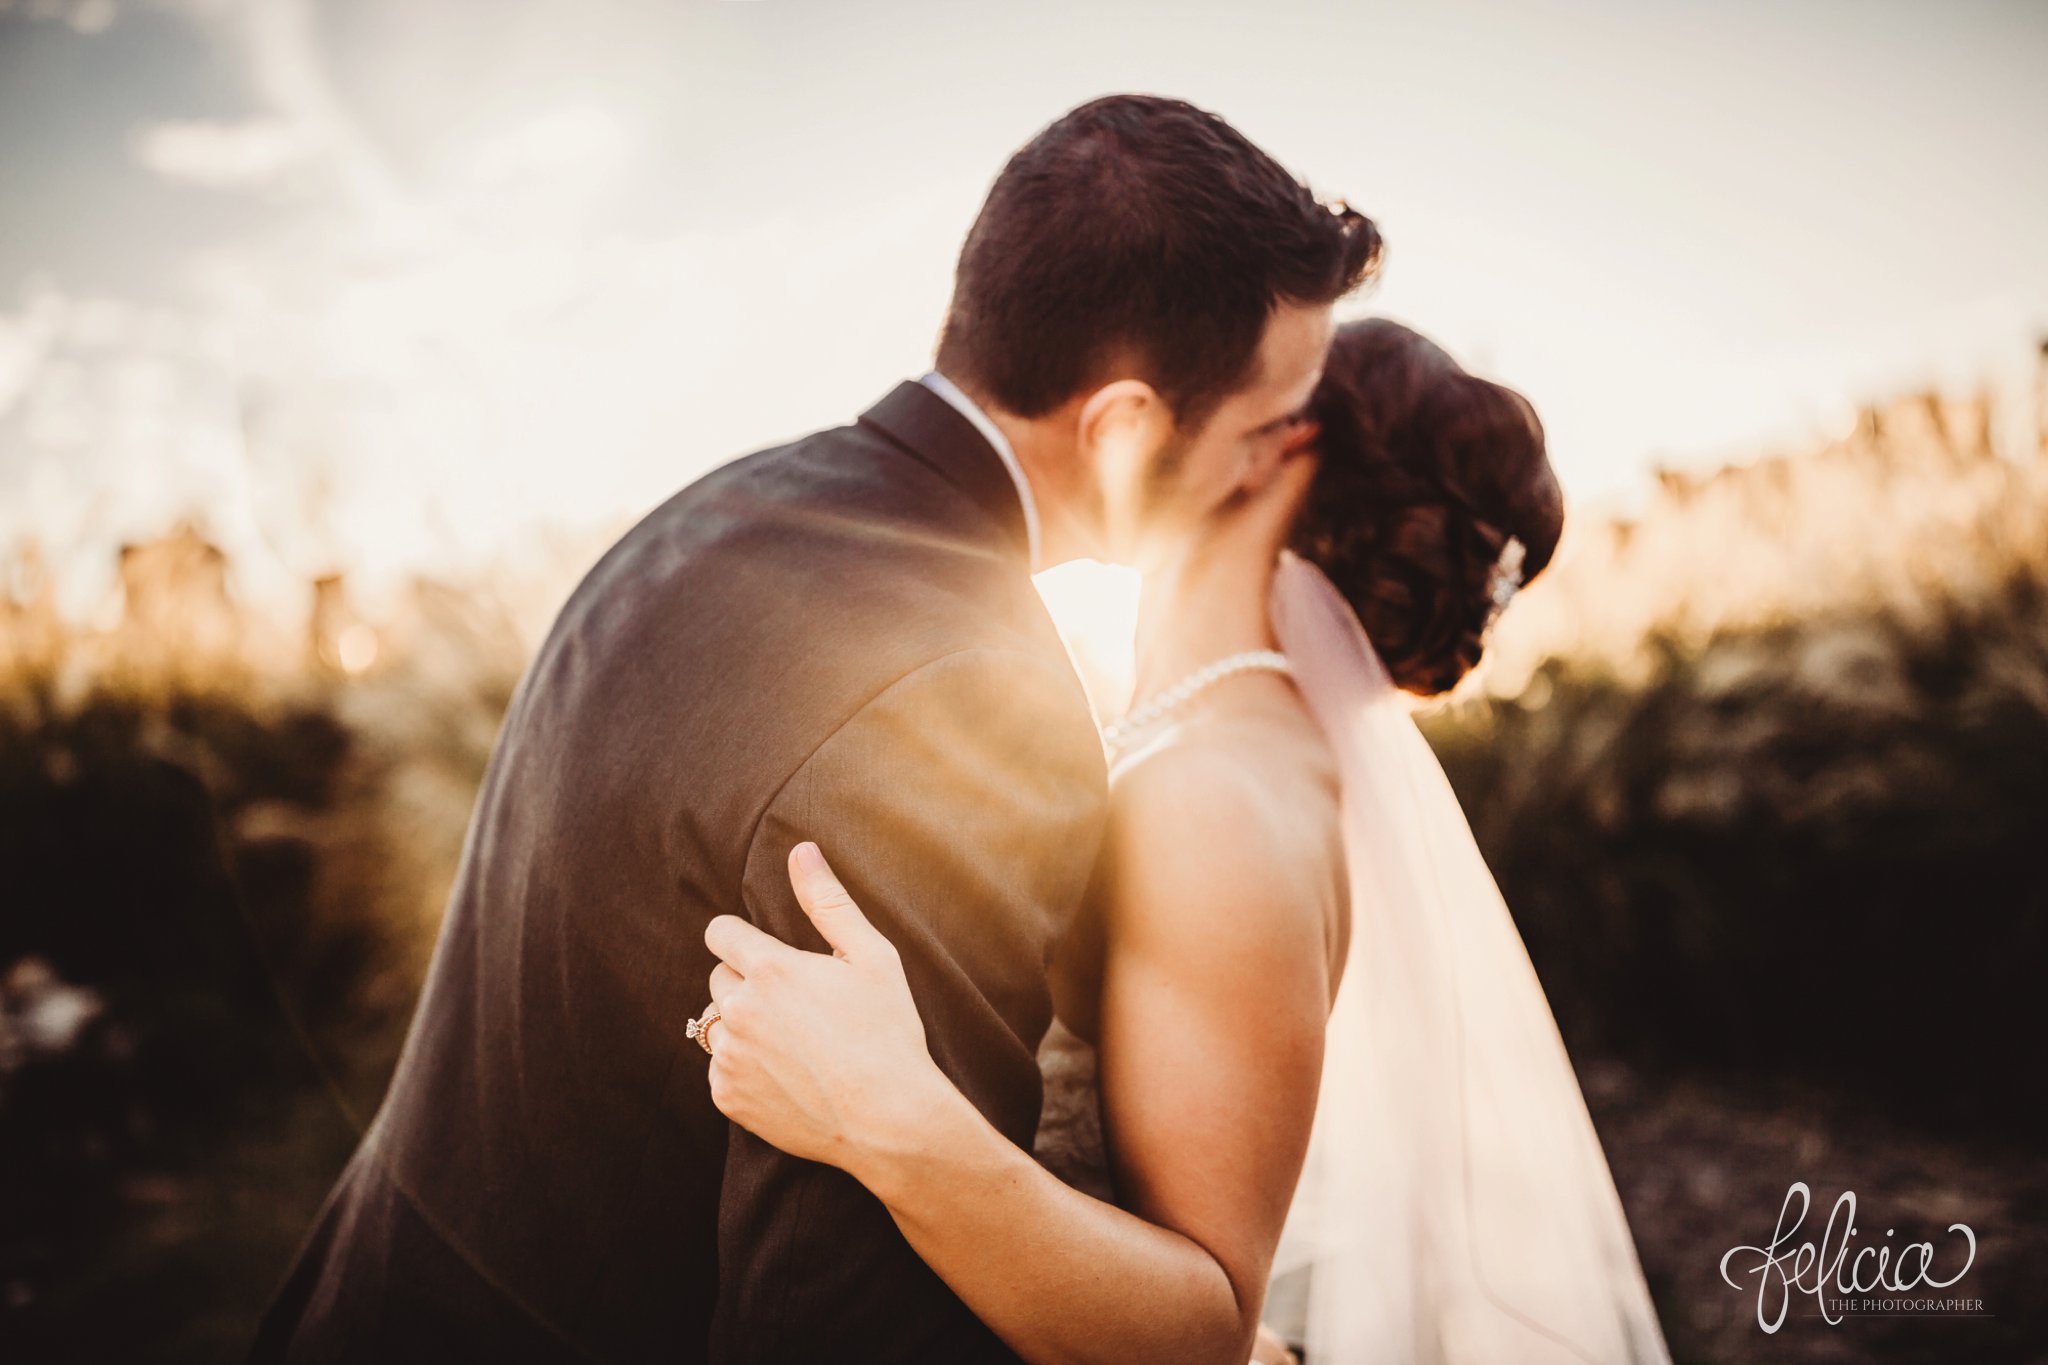 images by feliciathephotographer.com | wedding photographer | kansas city | sunset | golden hour | kiss | love | wheat | grey suit | pearls | 